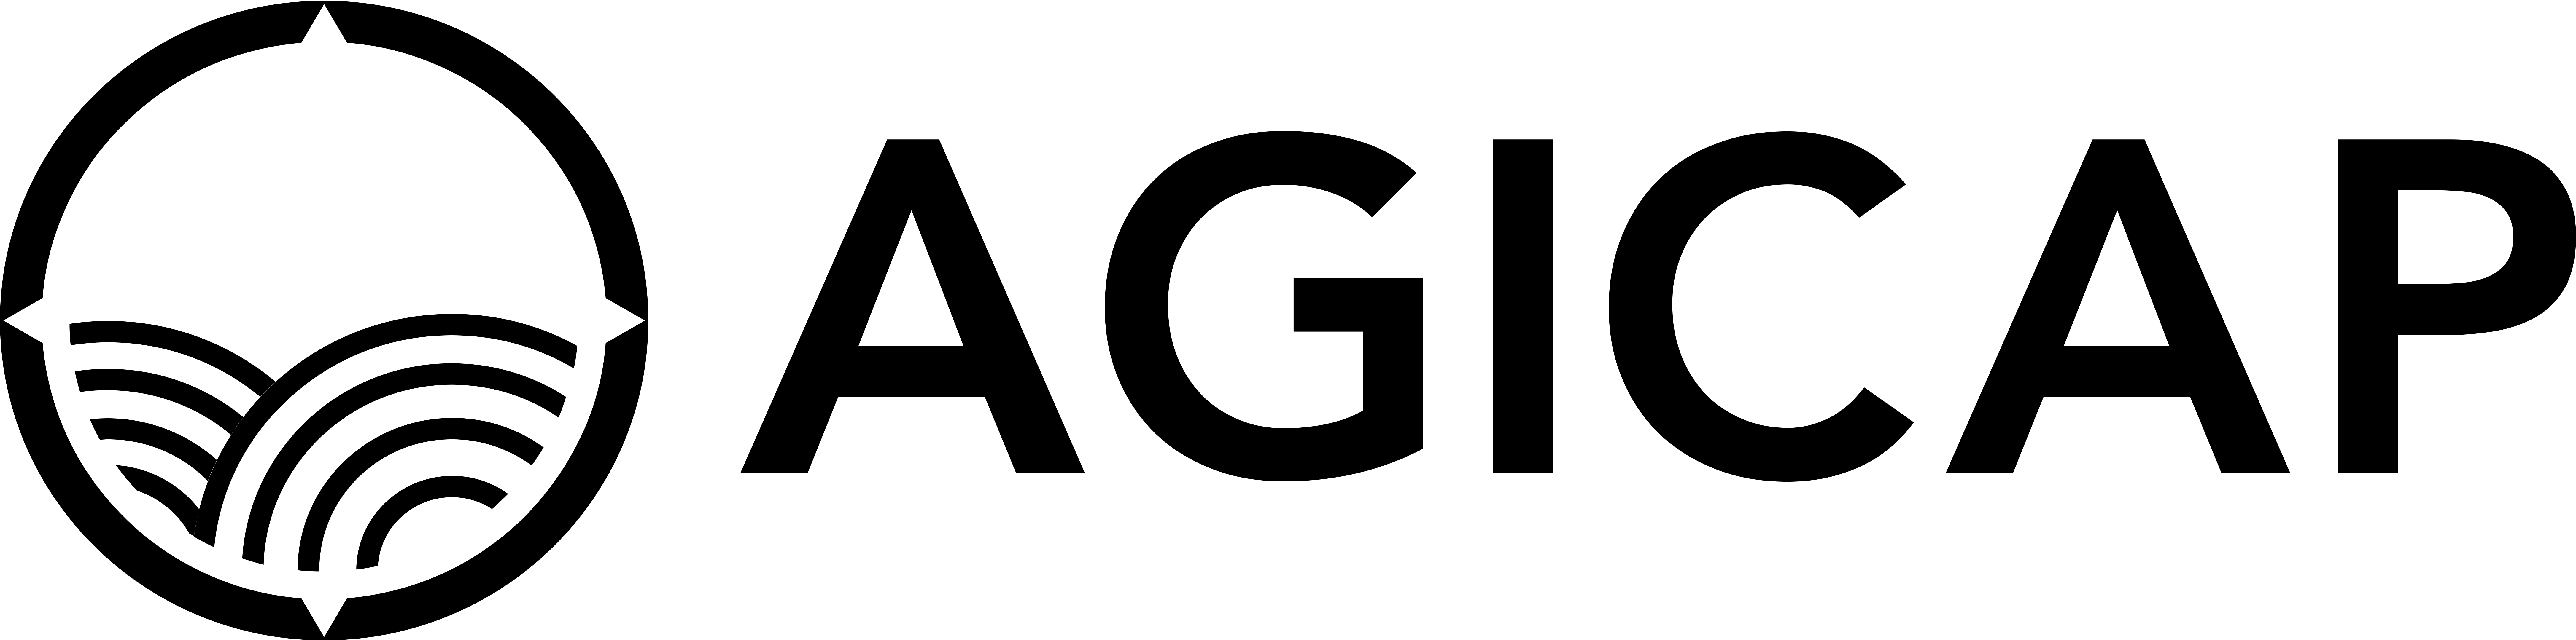 Agicap's logo